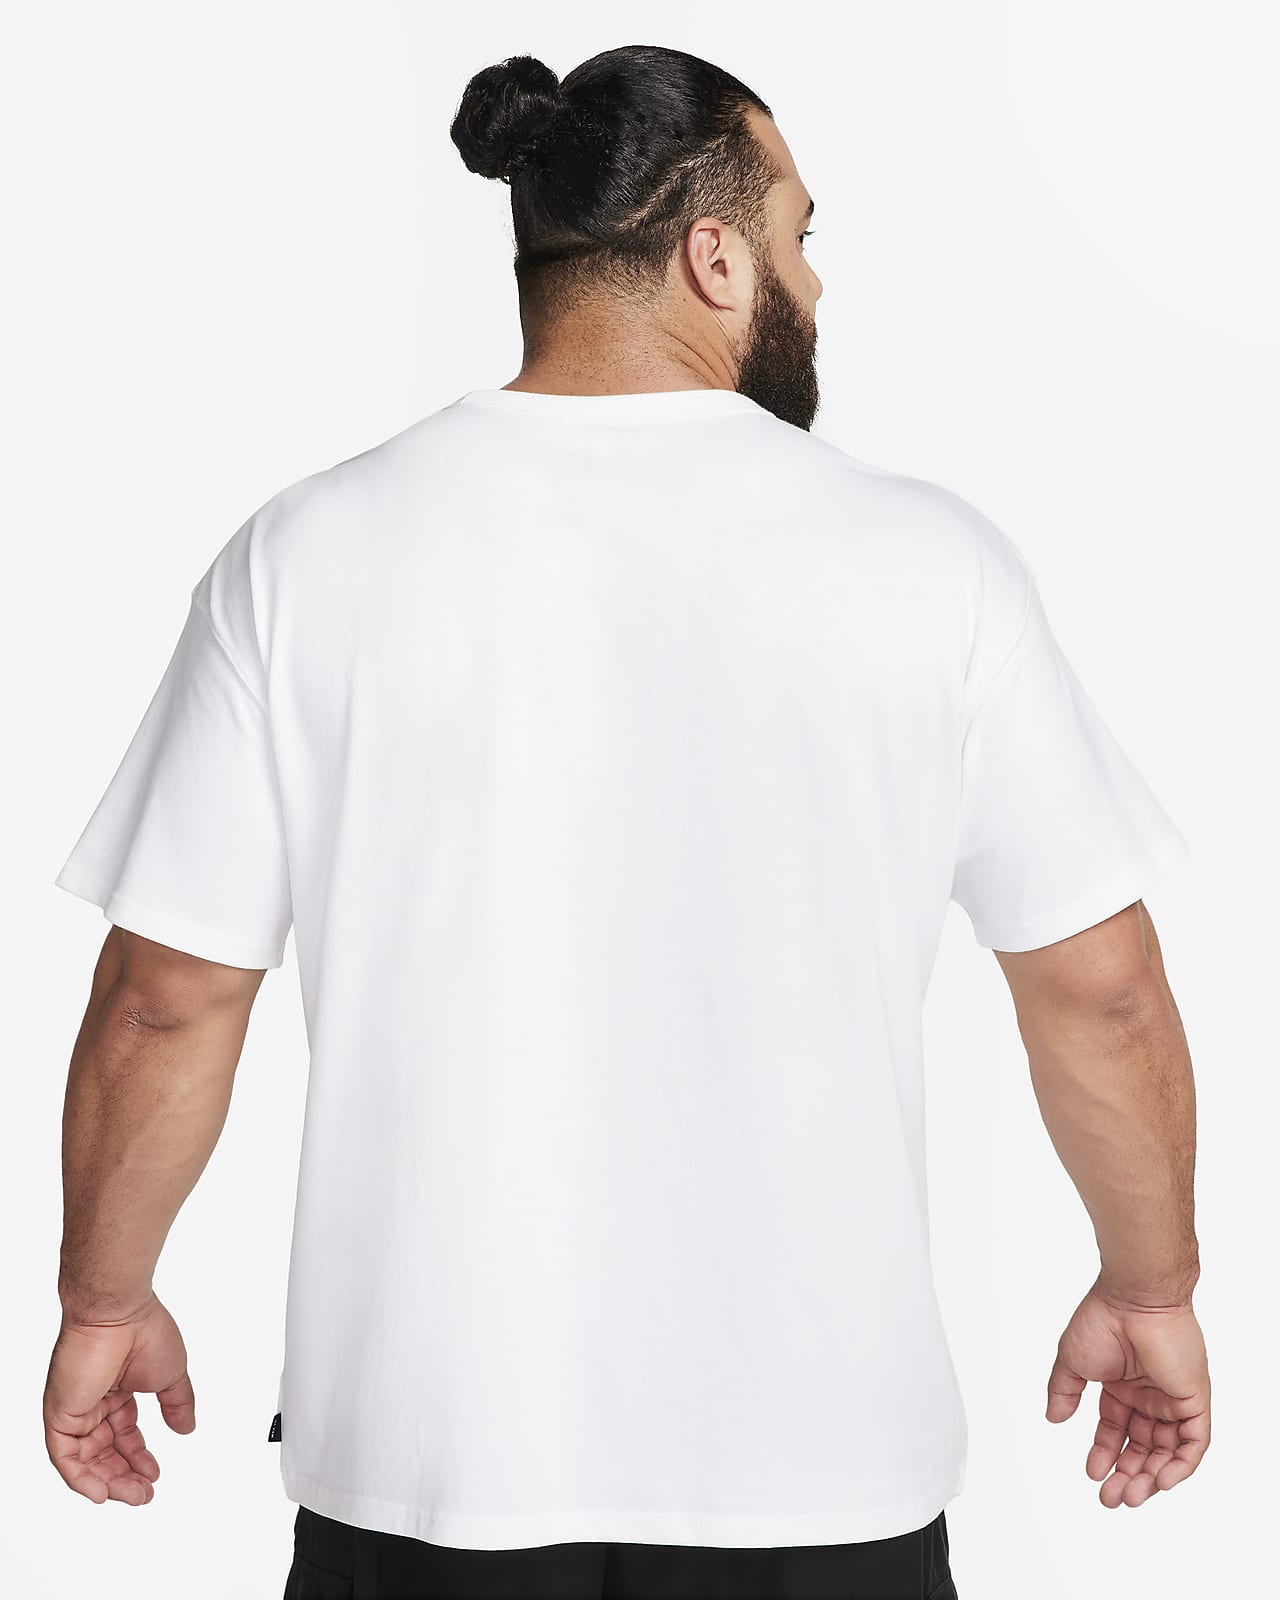 Nike Sportswear Premium Pocket T-Shirt. Essentials Men\'s